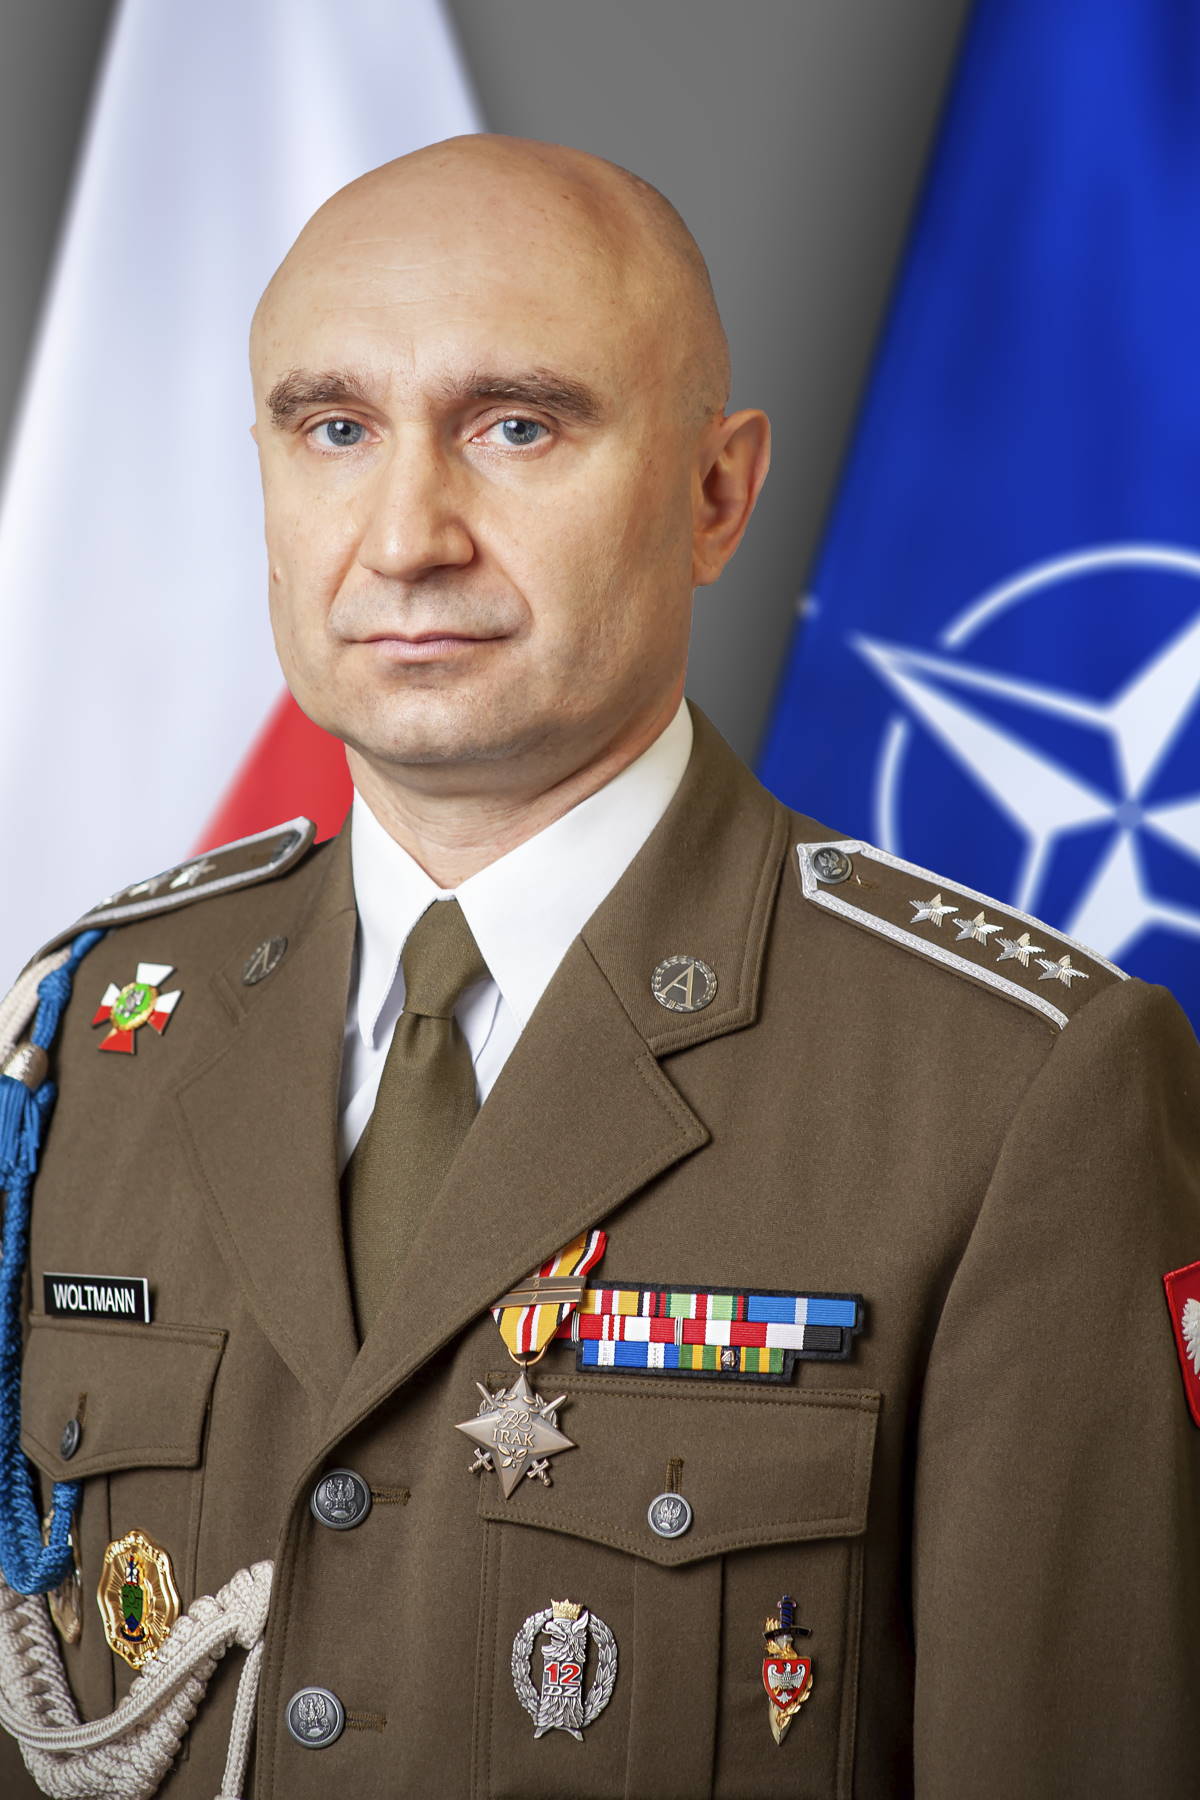 Senior Chief Warrant Officer Andrzej Woltmann